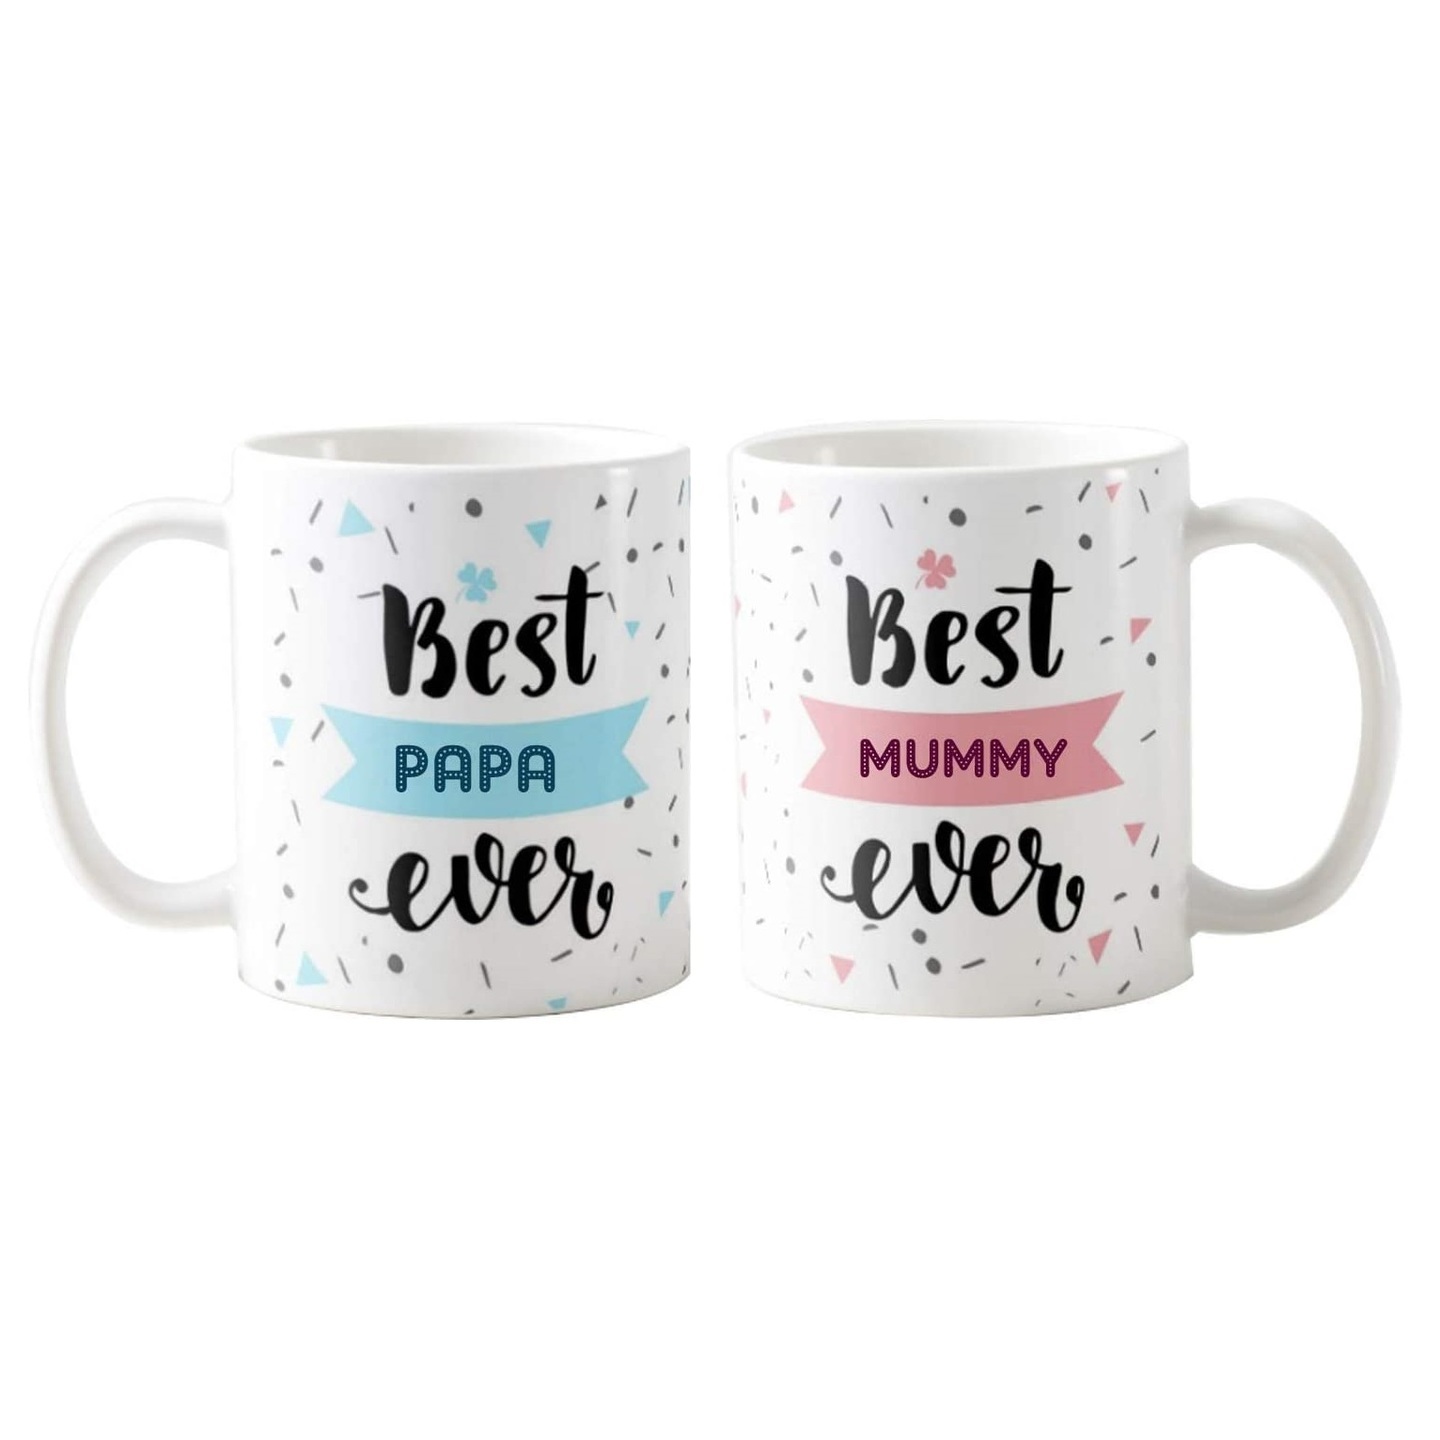 Set of 2 Ceramic Mugs - Best mom ever & Best dad ever